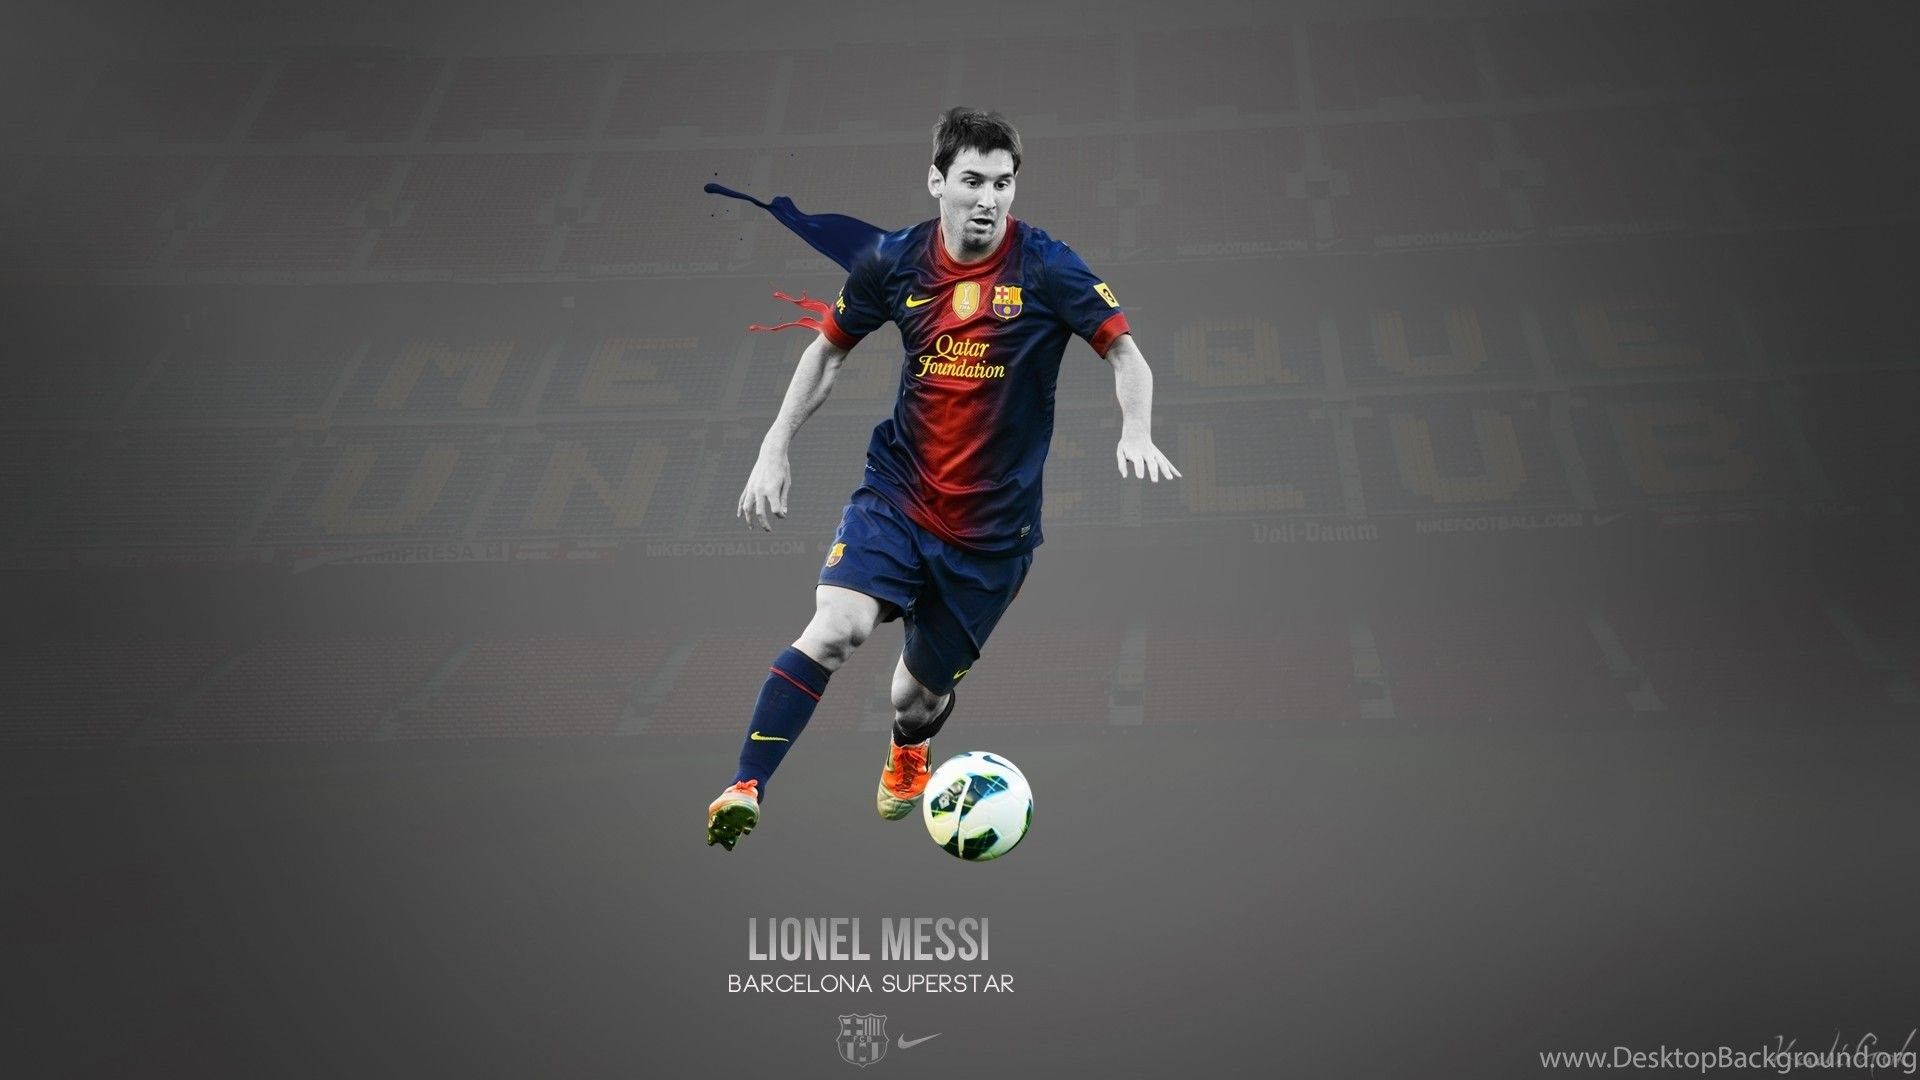 Lionel Messi Wallpaper High Quality Desktop Background